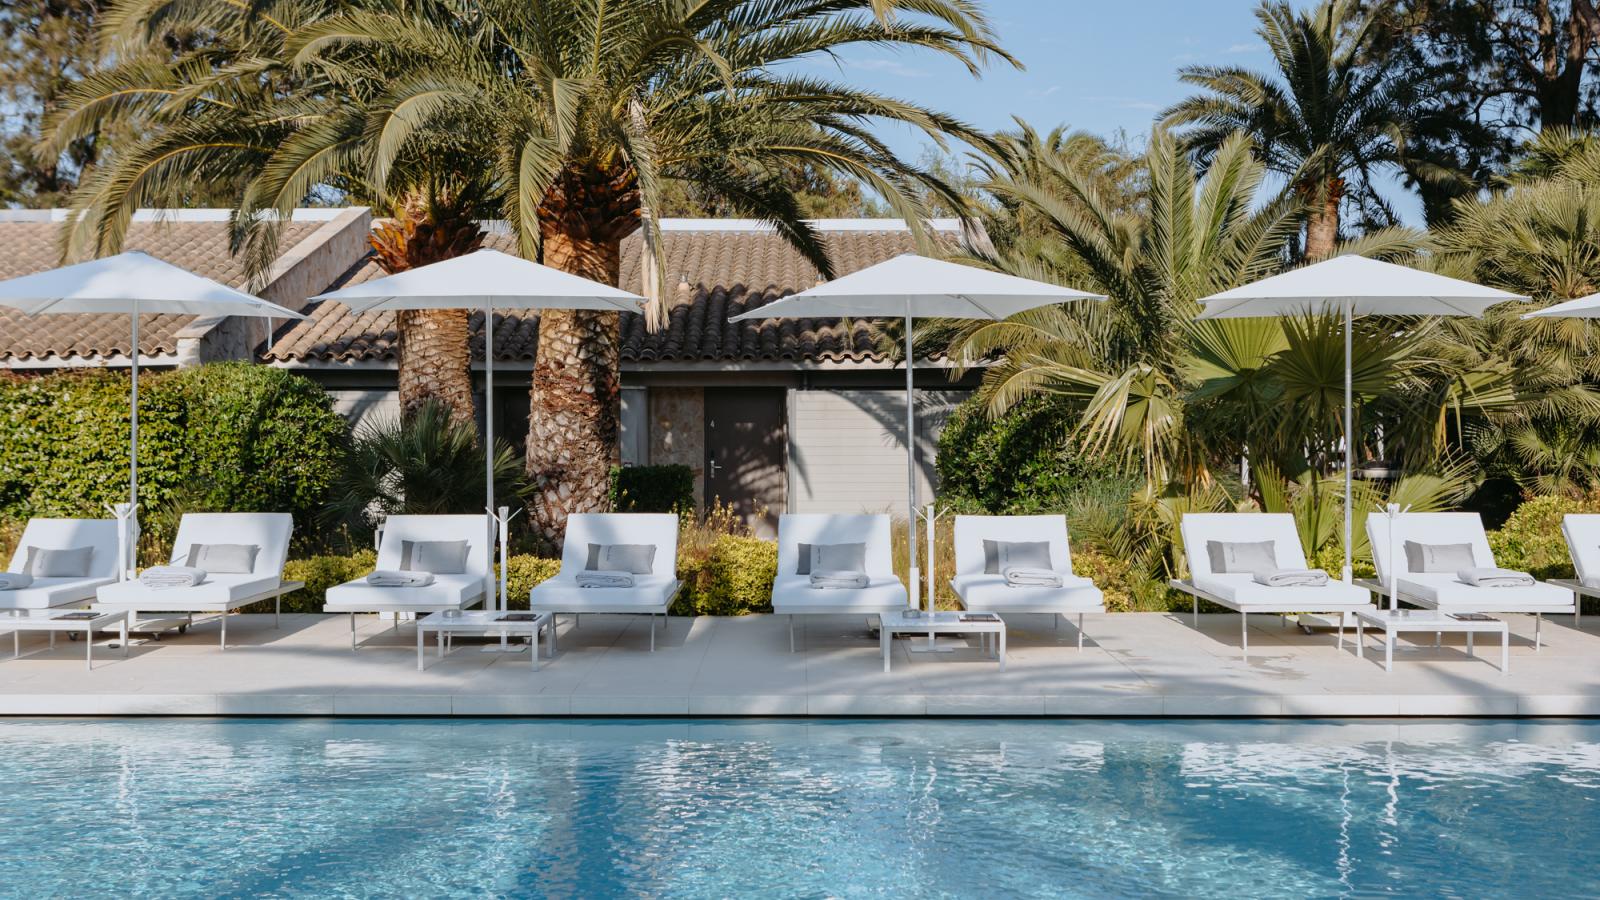 Luxurious Comfort under the Saint-Tropez Sun: The New Sun Loungers at Hôtel Sezz with Mattresses by Mousses Étoiles